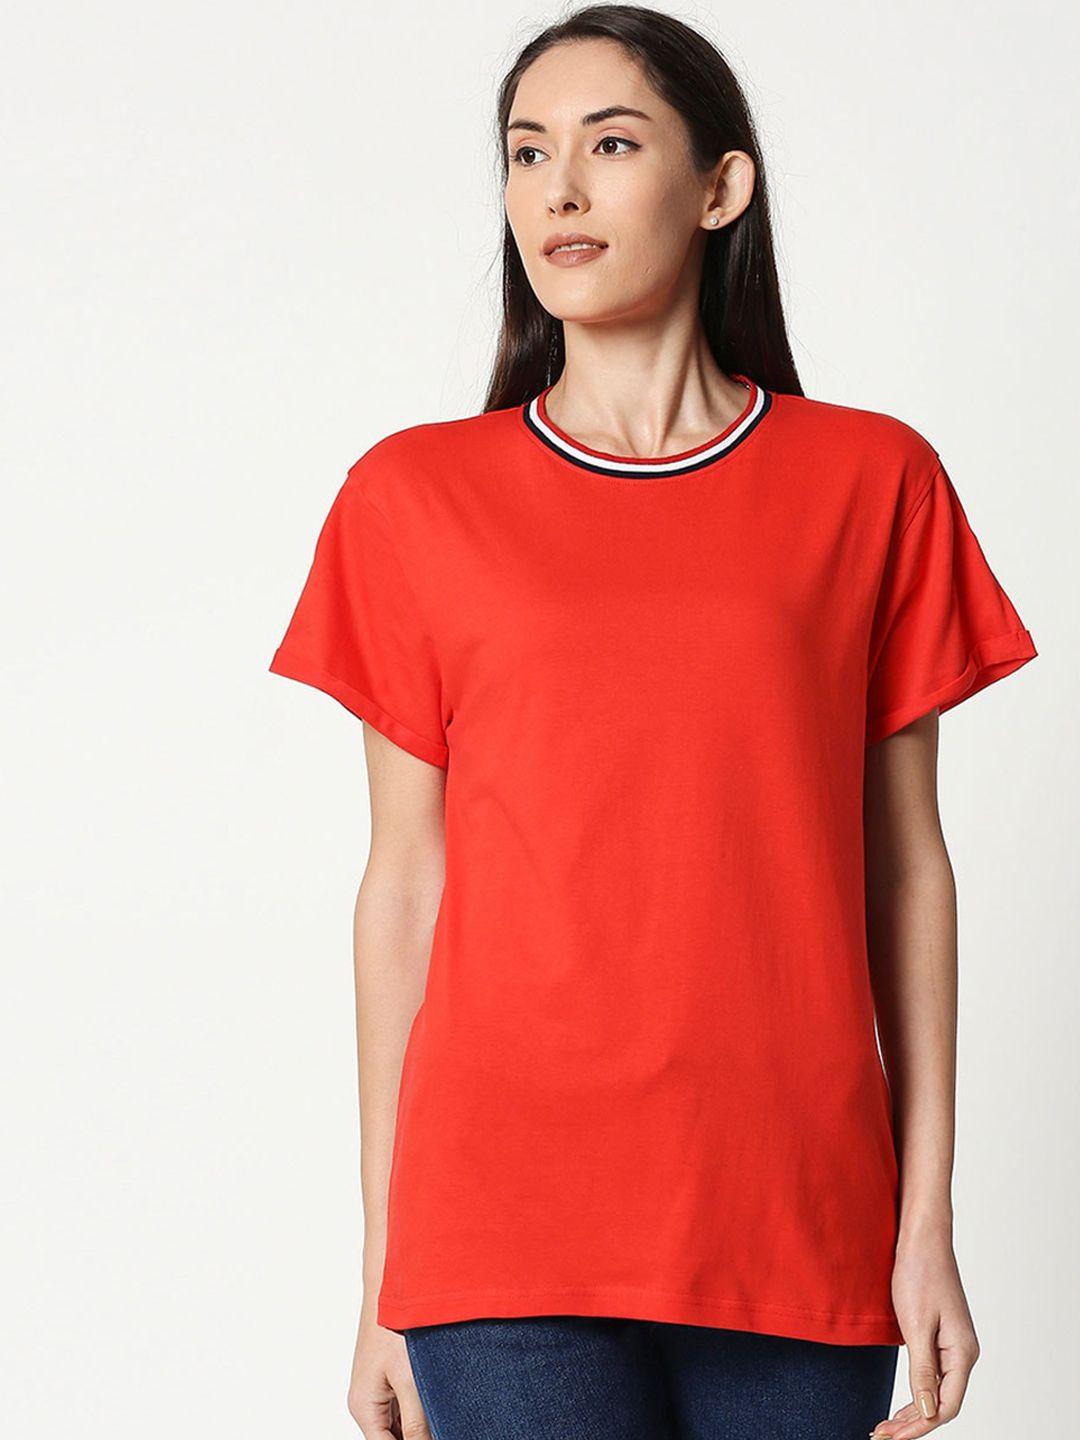 bewakoof women red solid round neck t-shirt